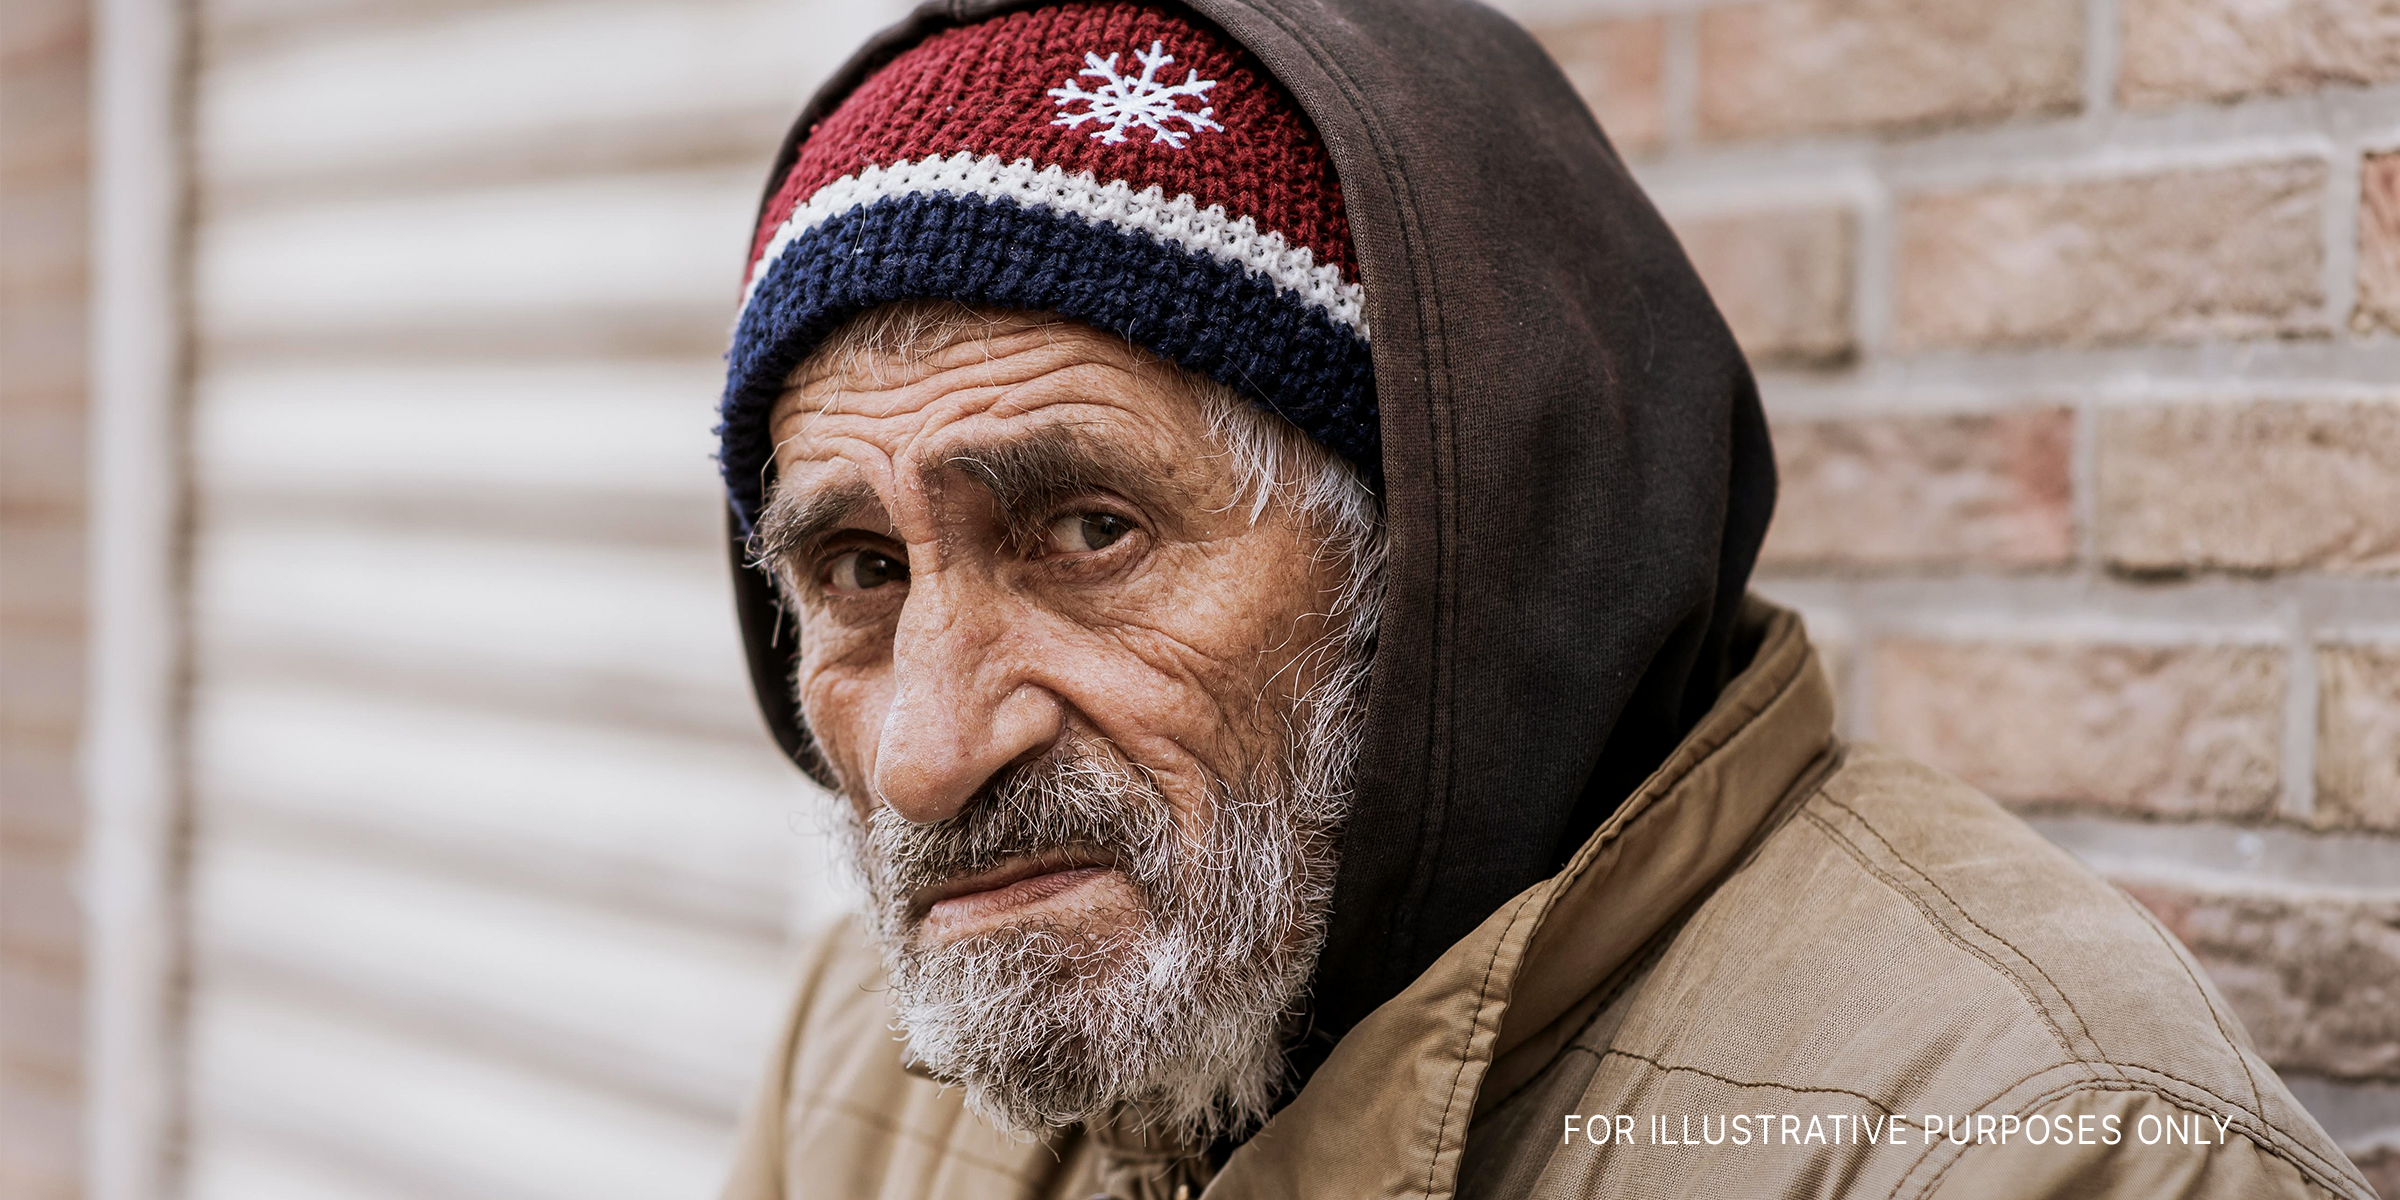 Old homeless man with a beard | Source: Freepik